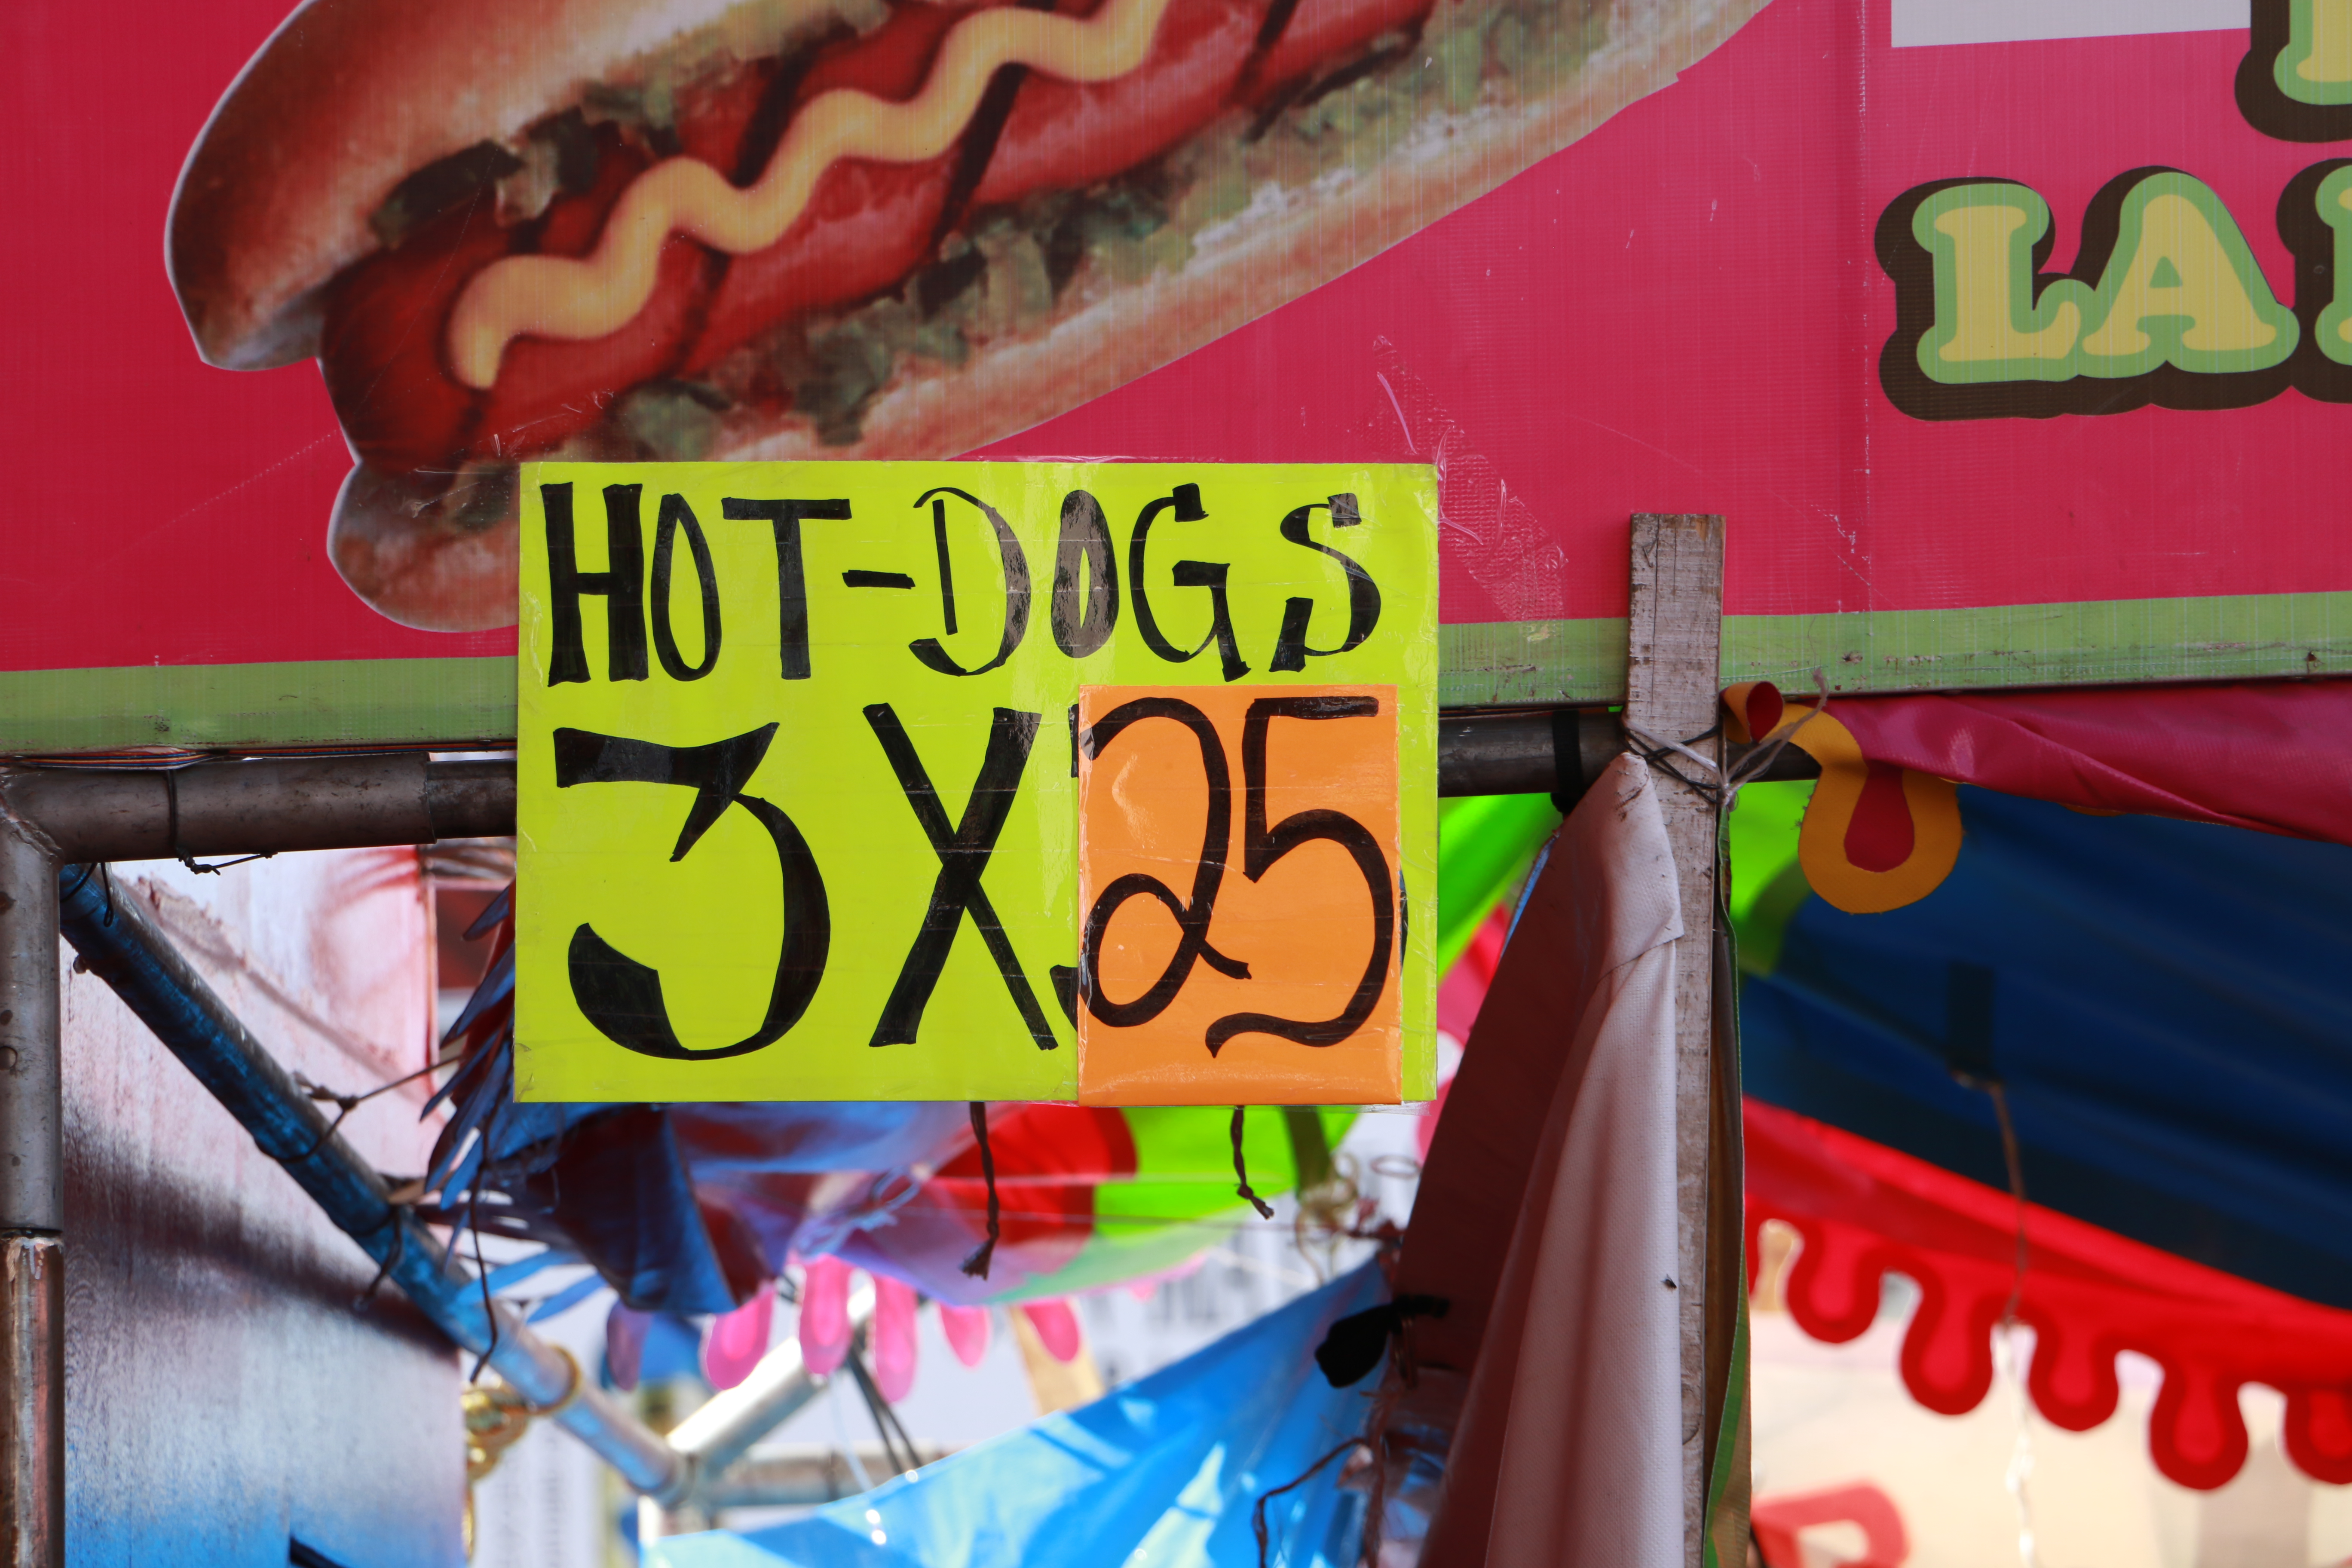 Hot dogs 3x25 FNSM 2016